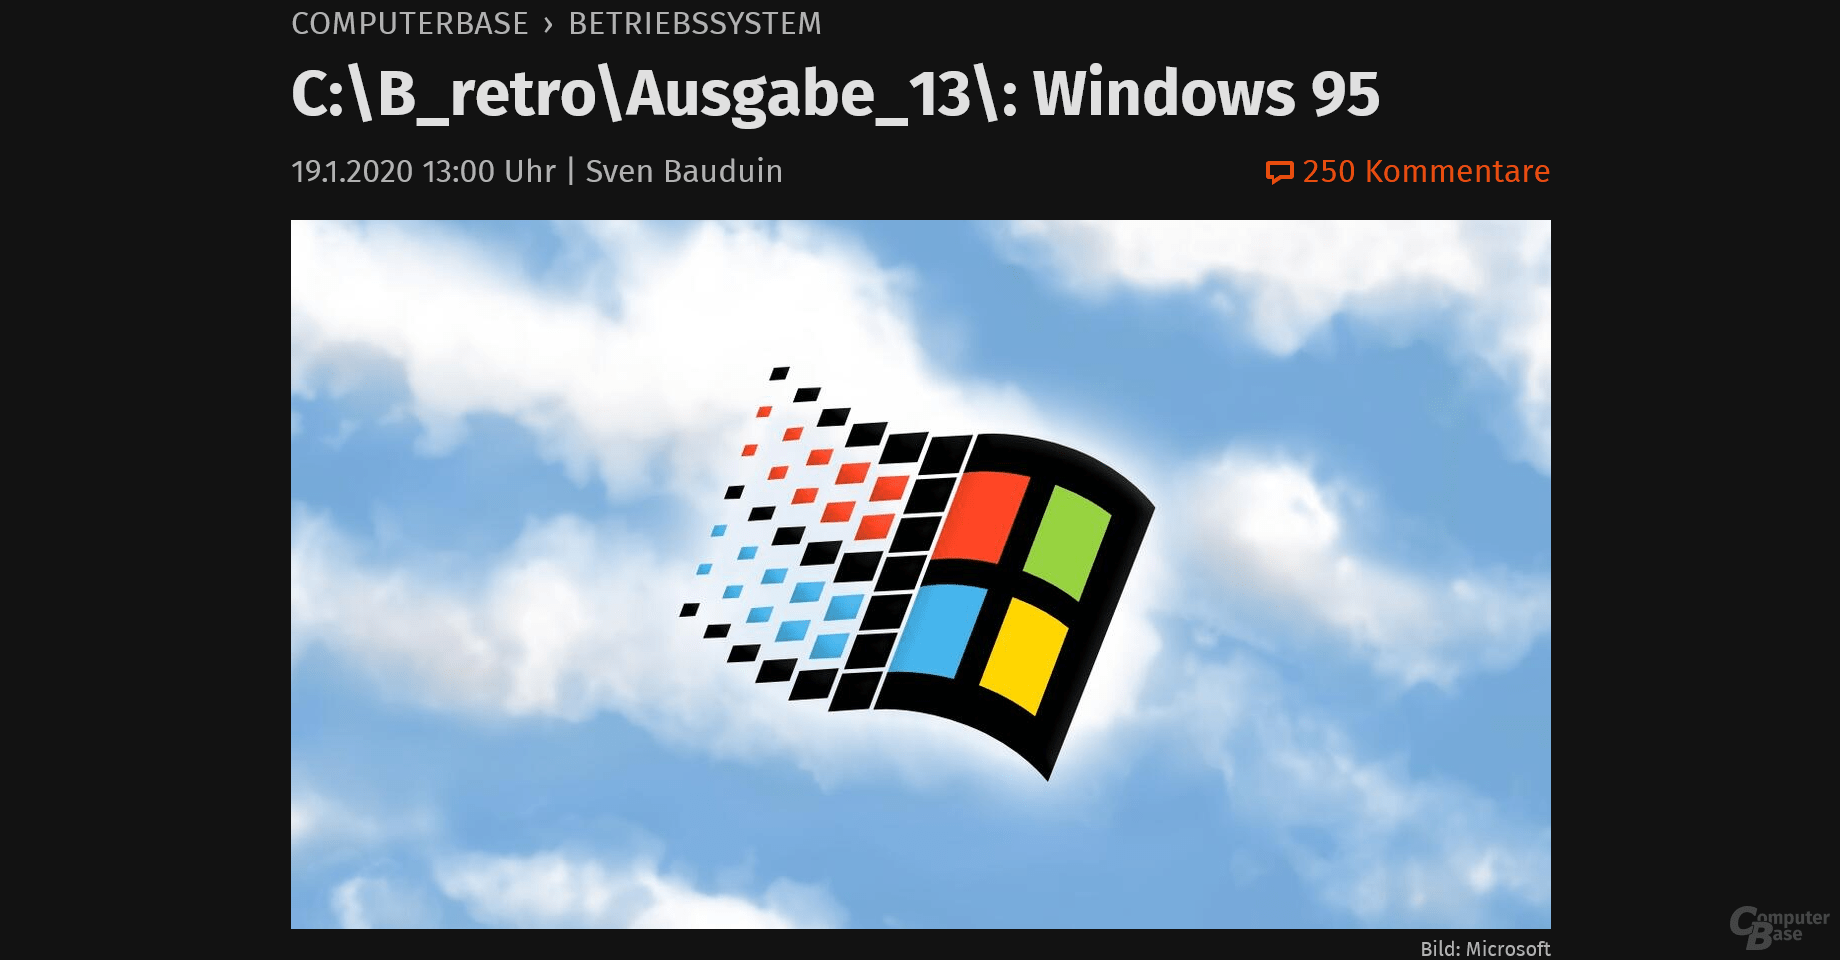 C:\B_retro\Ausgabe_13\: Windows 95